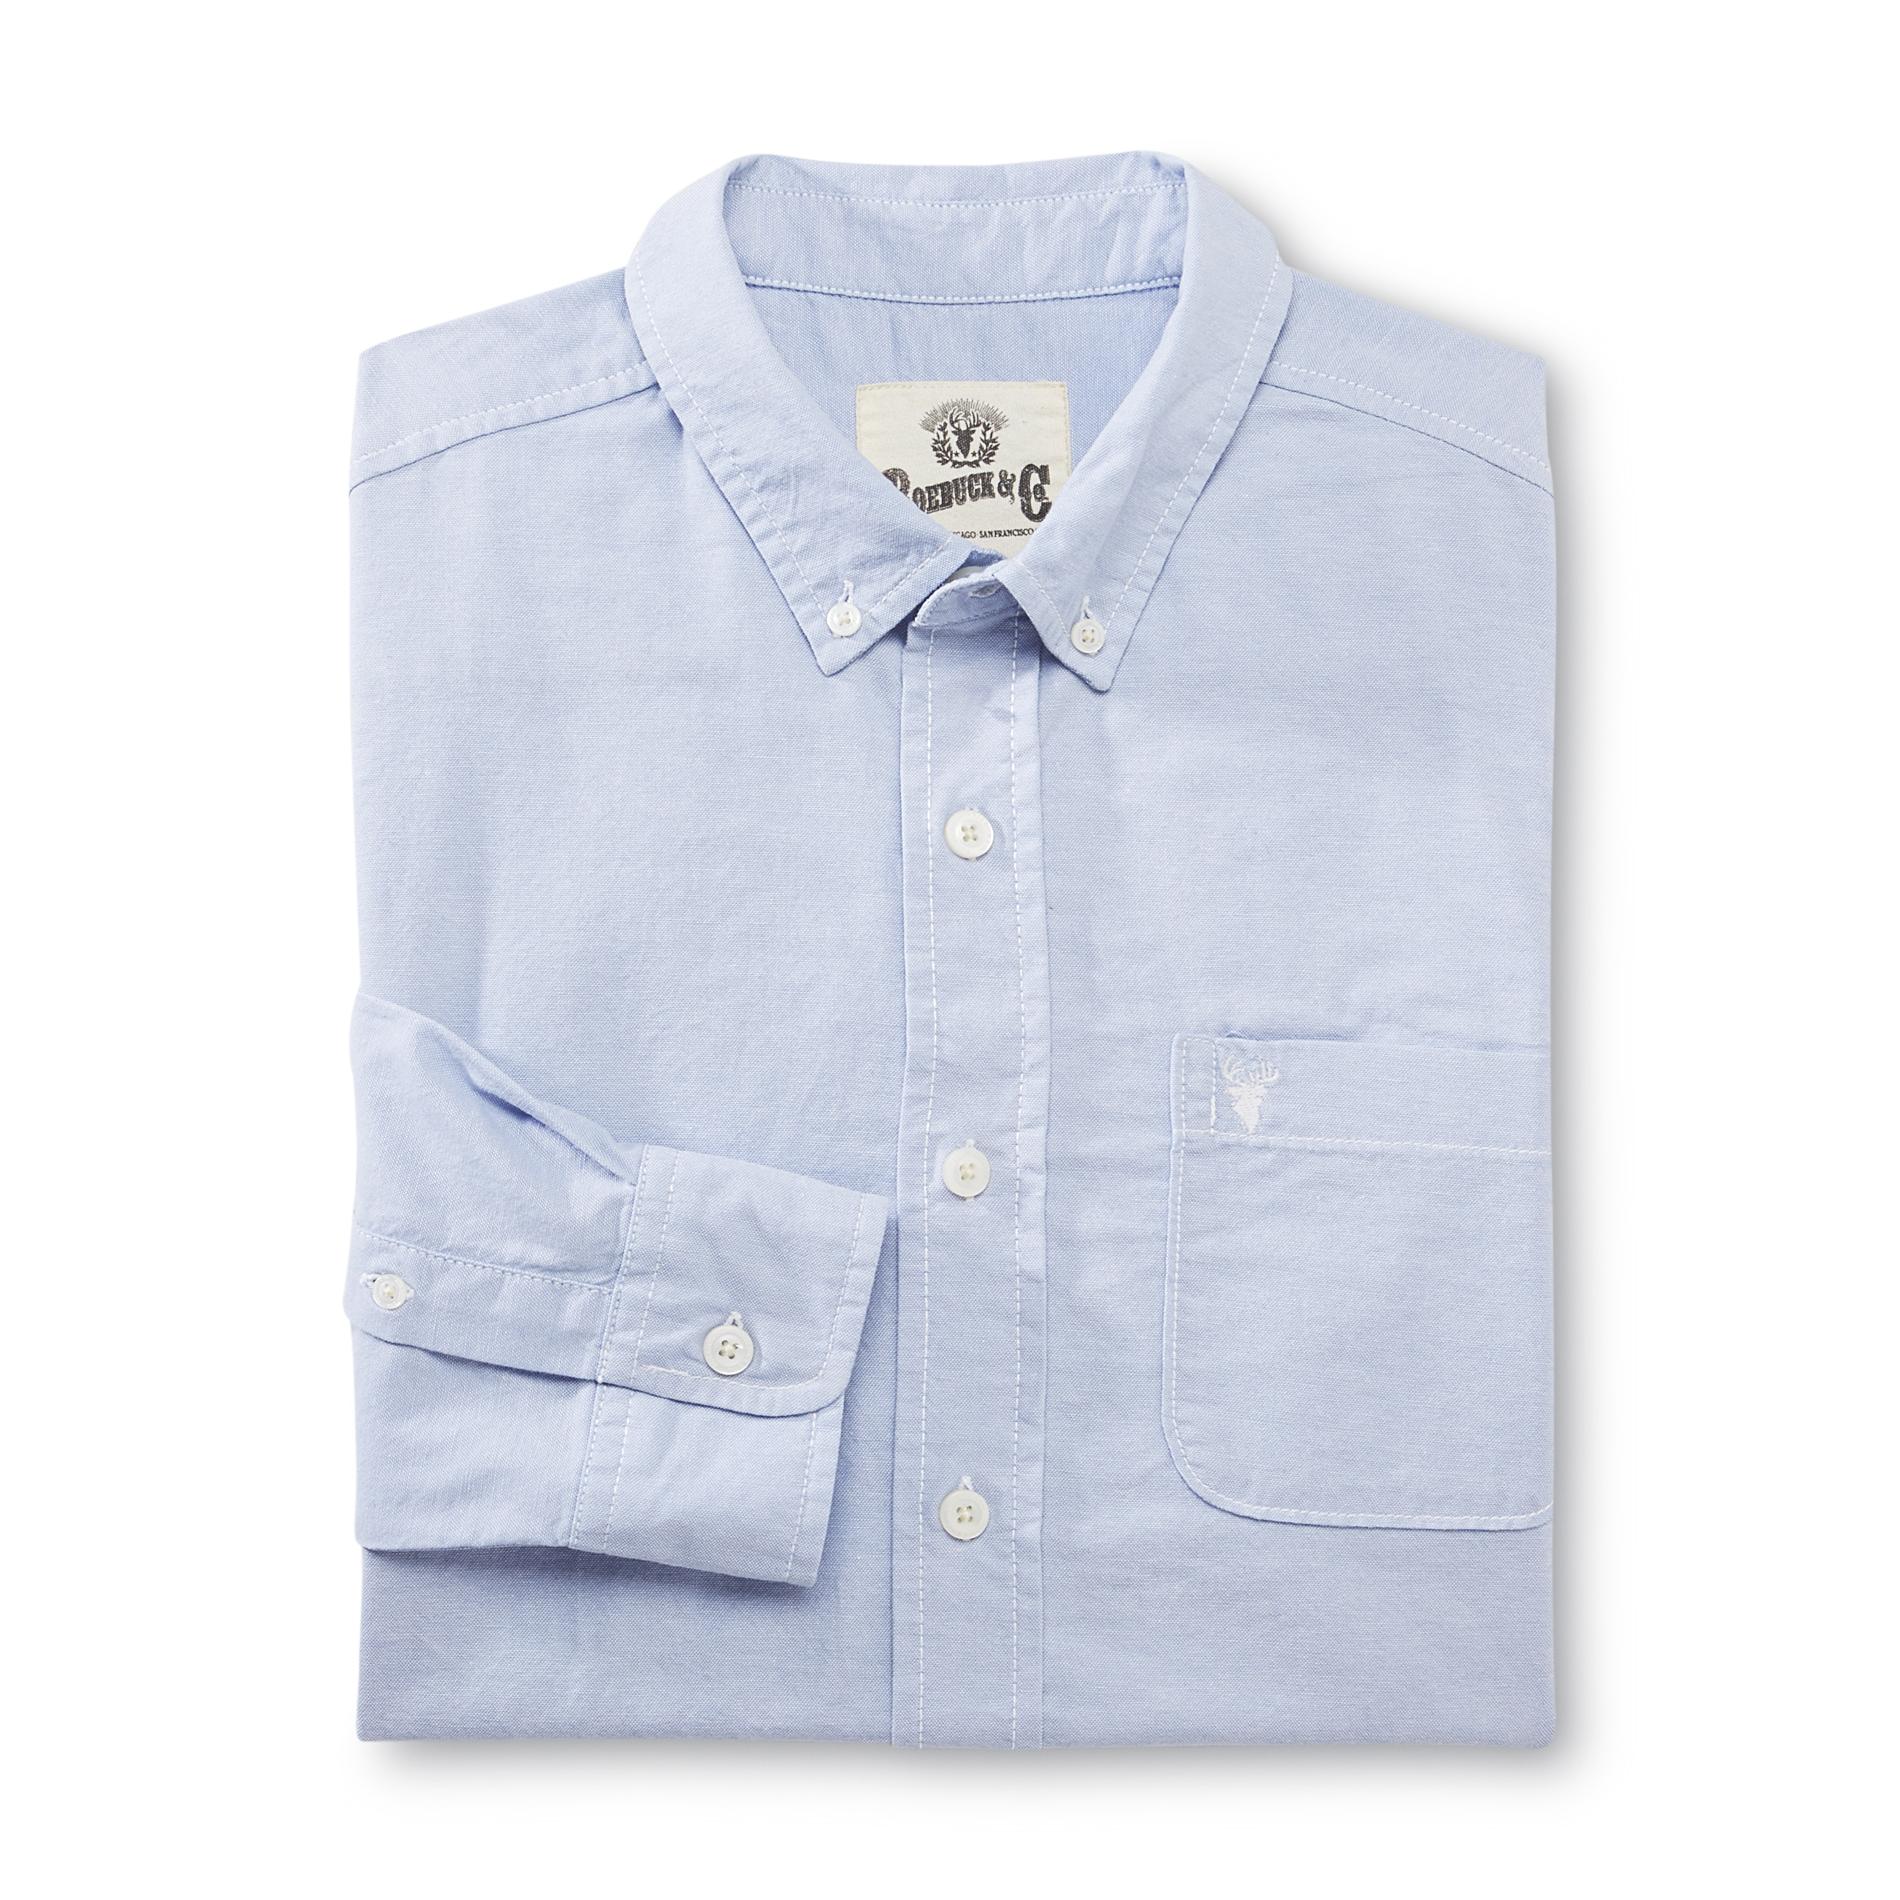 Roebuck & Co. Young Men's Button-Front Oxford Shirt